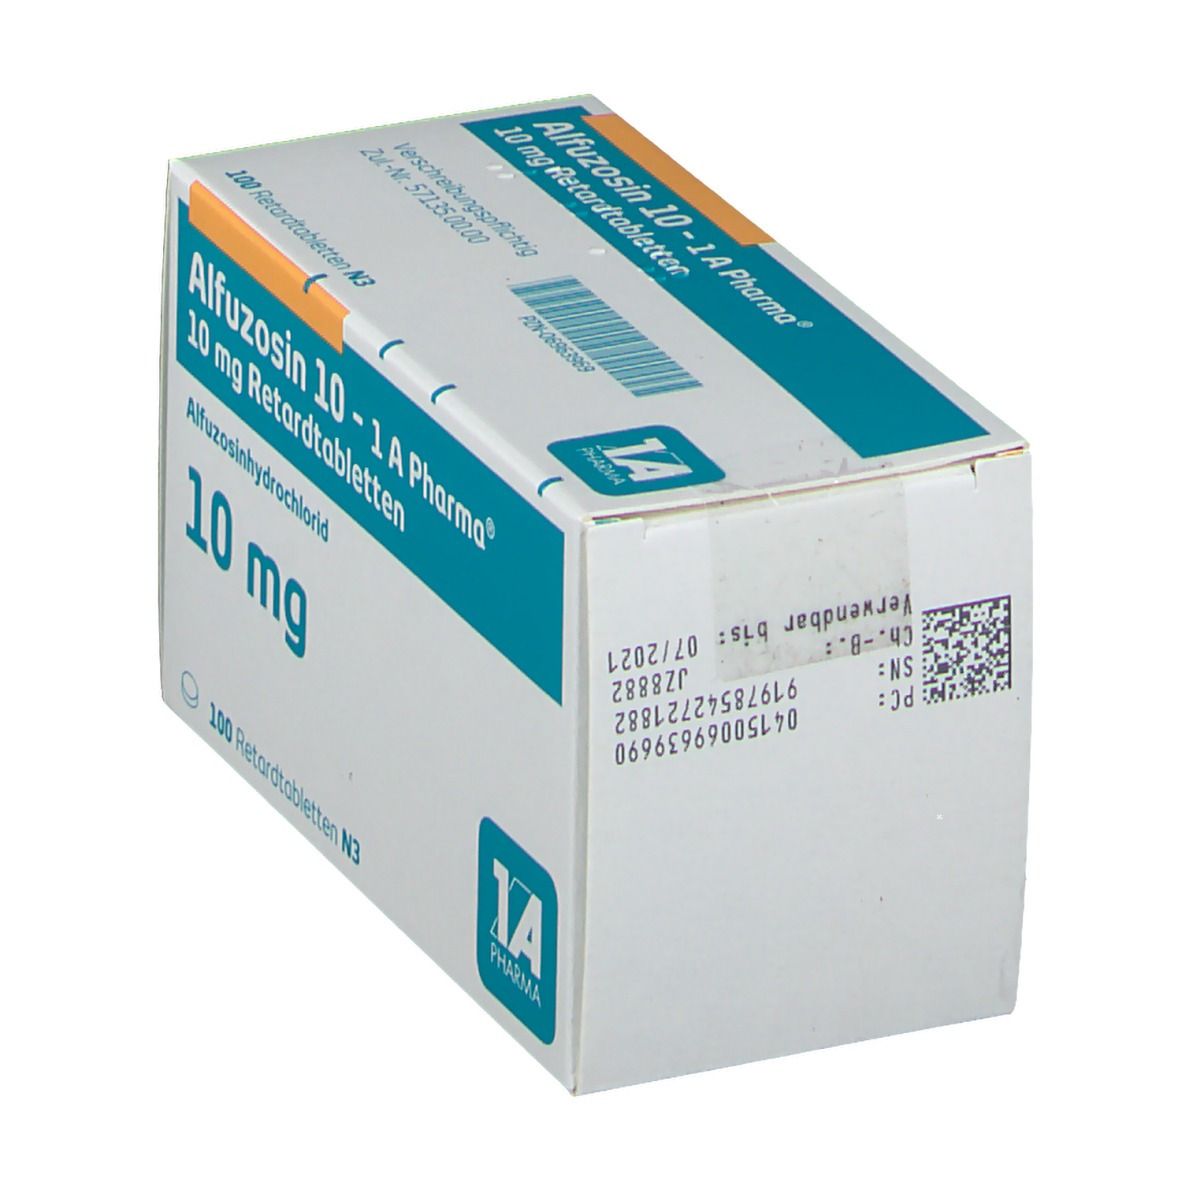 Alfuzosin 10 - 1 A Pharma® 10 mg 100 St mit dem E-Rezept kaufen - SHOP  APOTHEKE